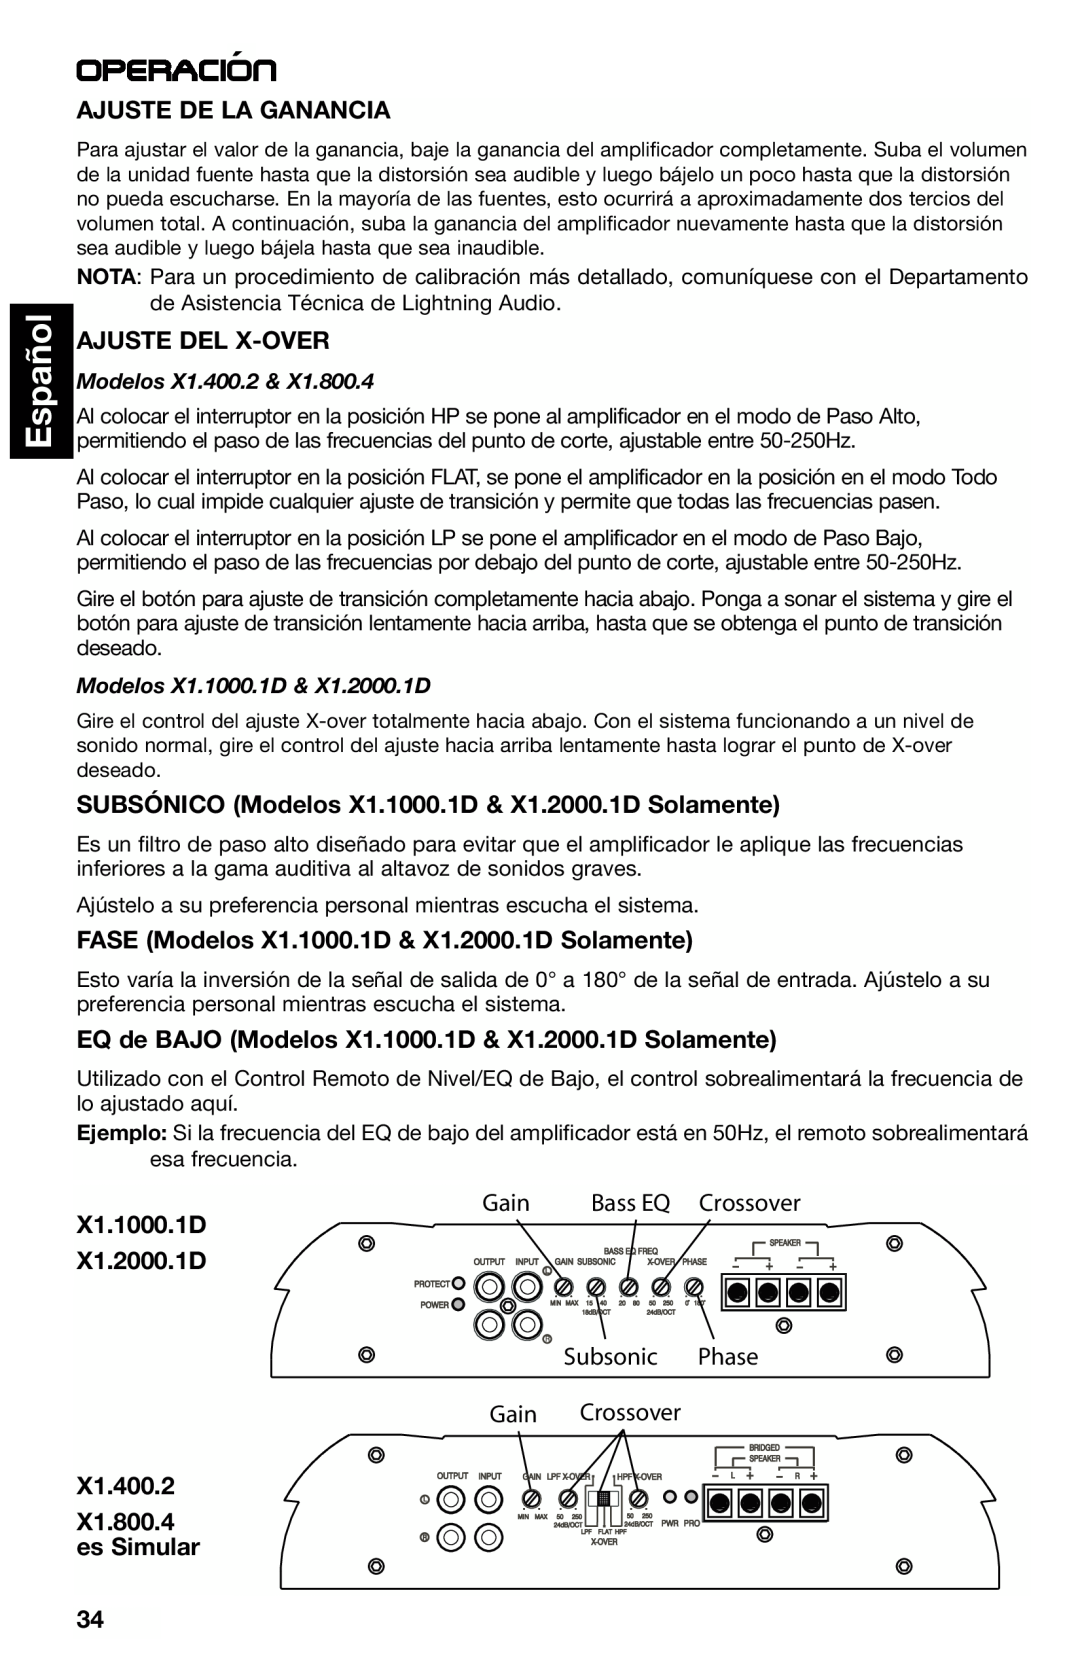 Lightning Audio Operacion´, Español, Ajuste De La Ganancia, Ajuste Del X-Over, X1.1000.1D X1.2000.1D, Modelos X1.400.2 